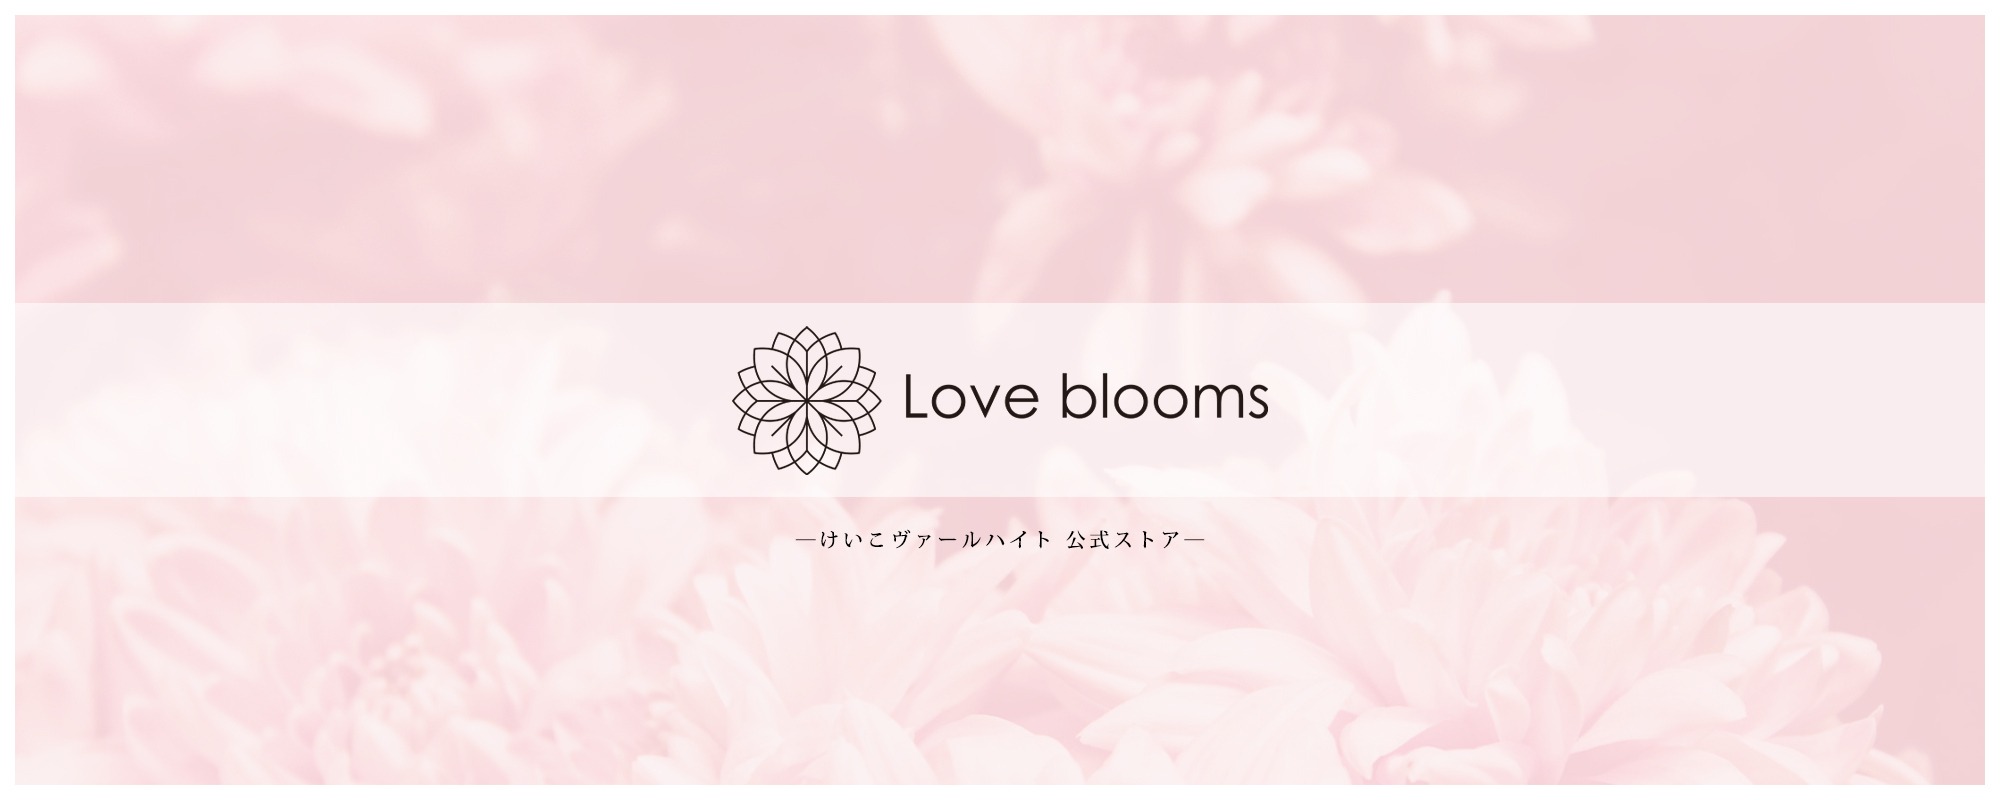 Love blooms